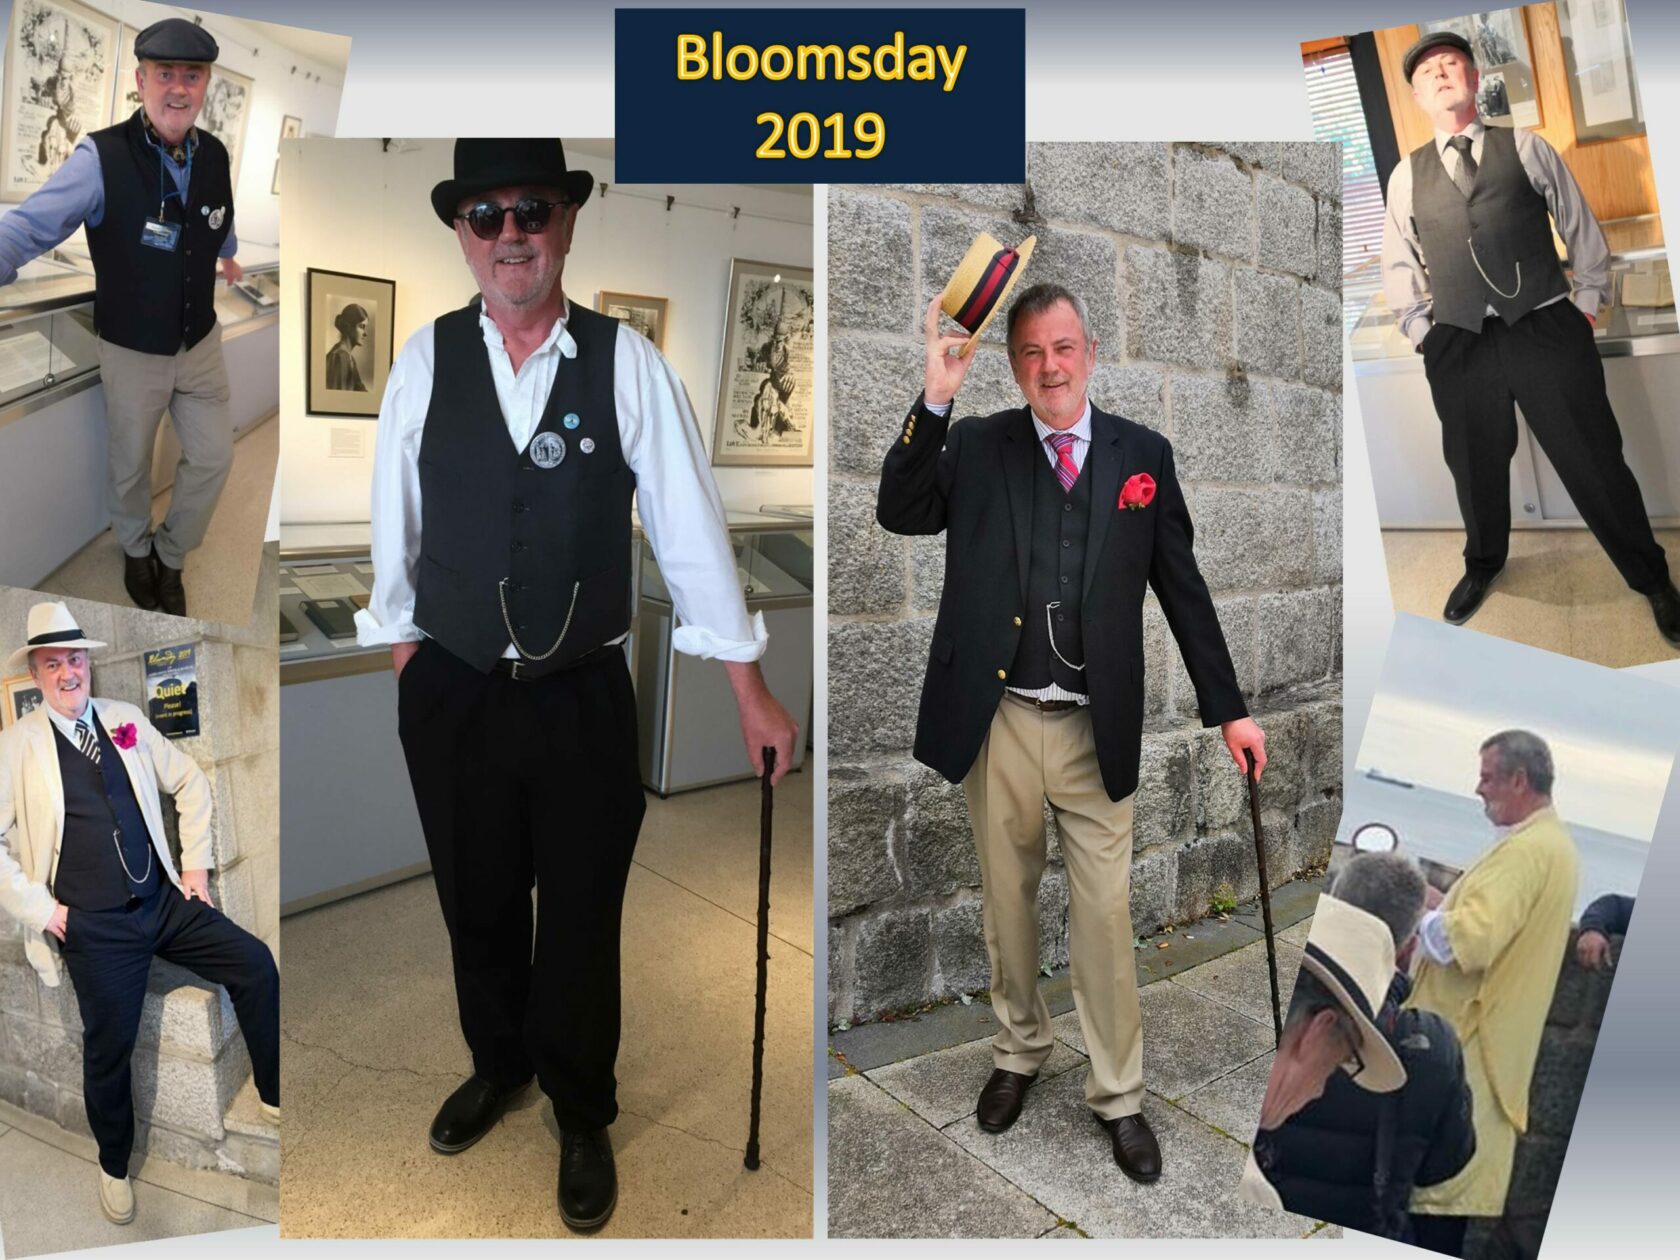 NO Bribery or Corruption at Bloomsday Best Dressed Volunteer Awards?!